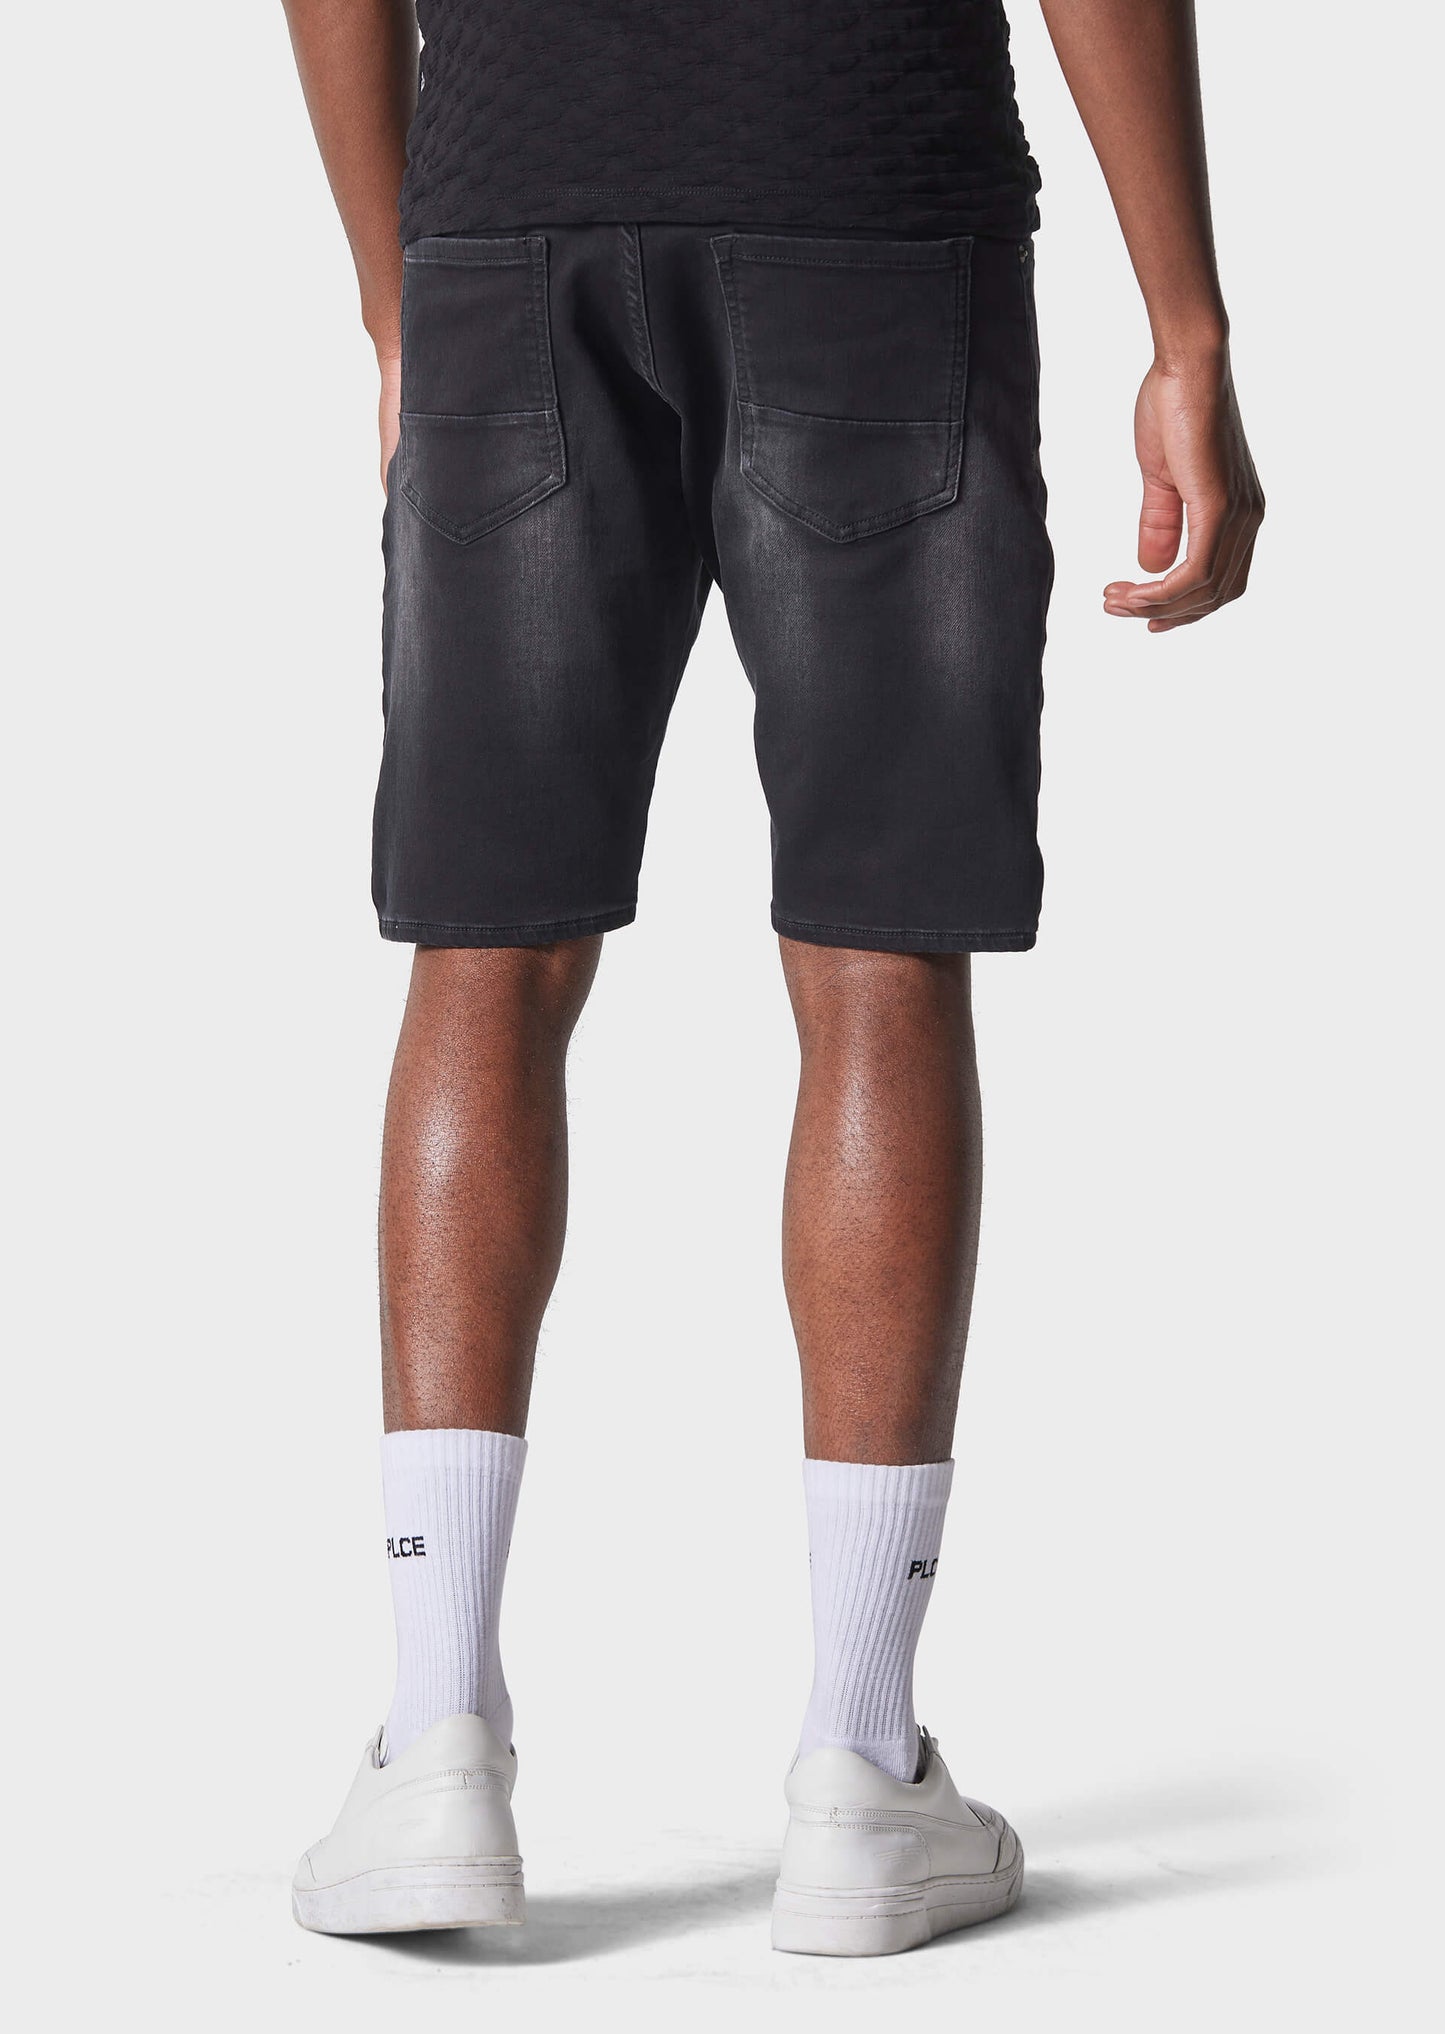 Berrit 815 Shorts